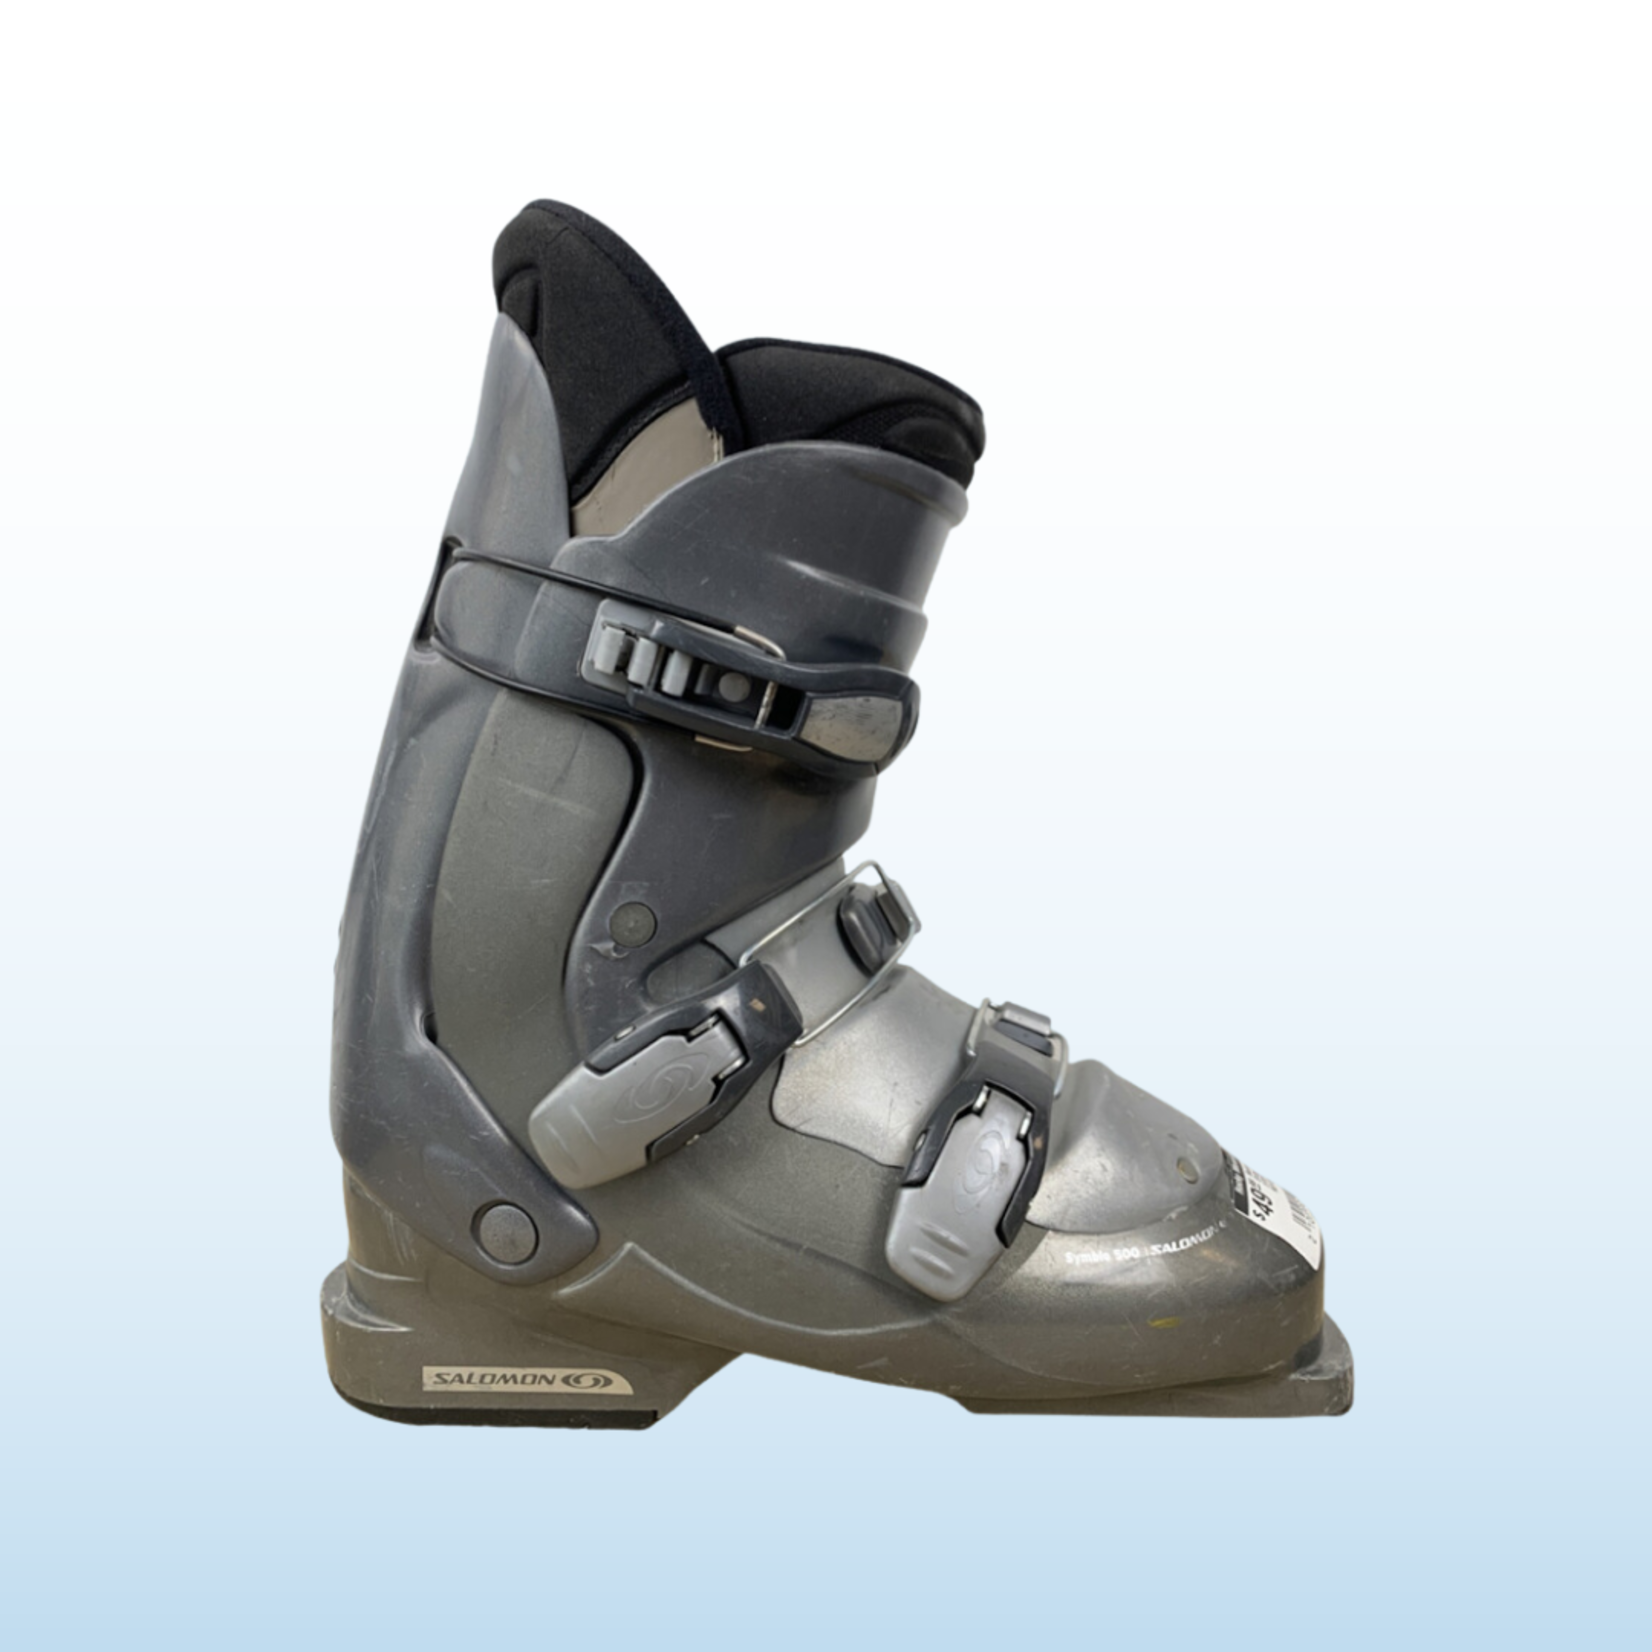 Salomon Salomon Symbio Rear Entry Ski Boots, Size 30  SOLD AS IS/NO REFUNDS/EXCHANGES